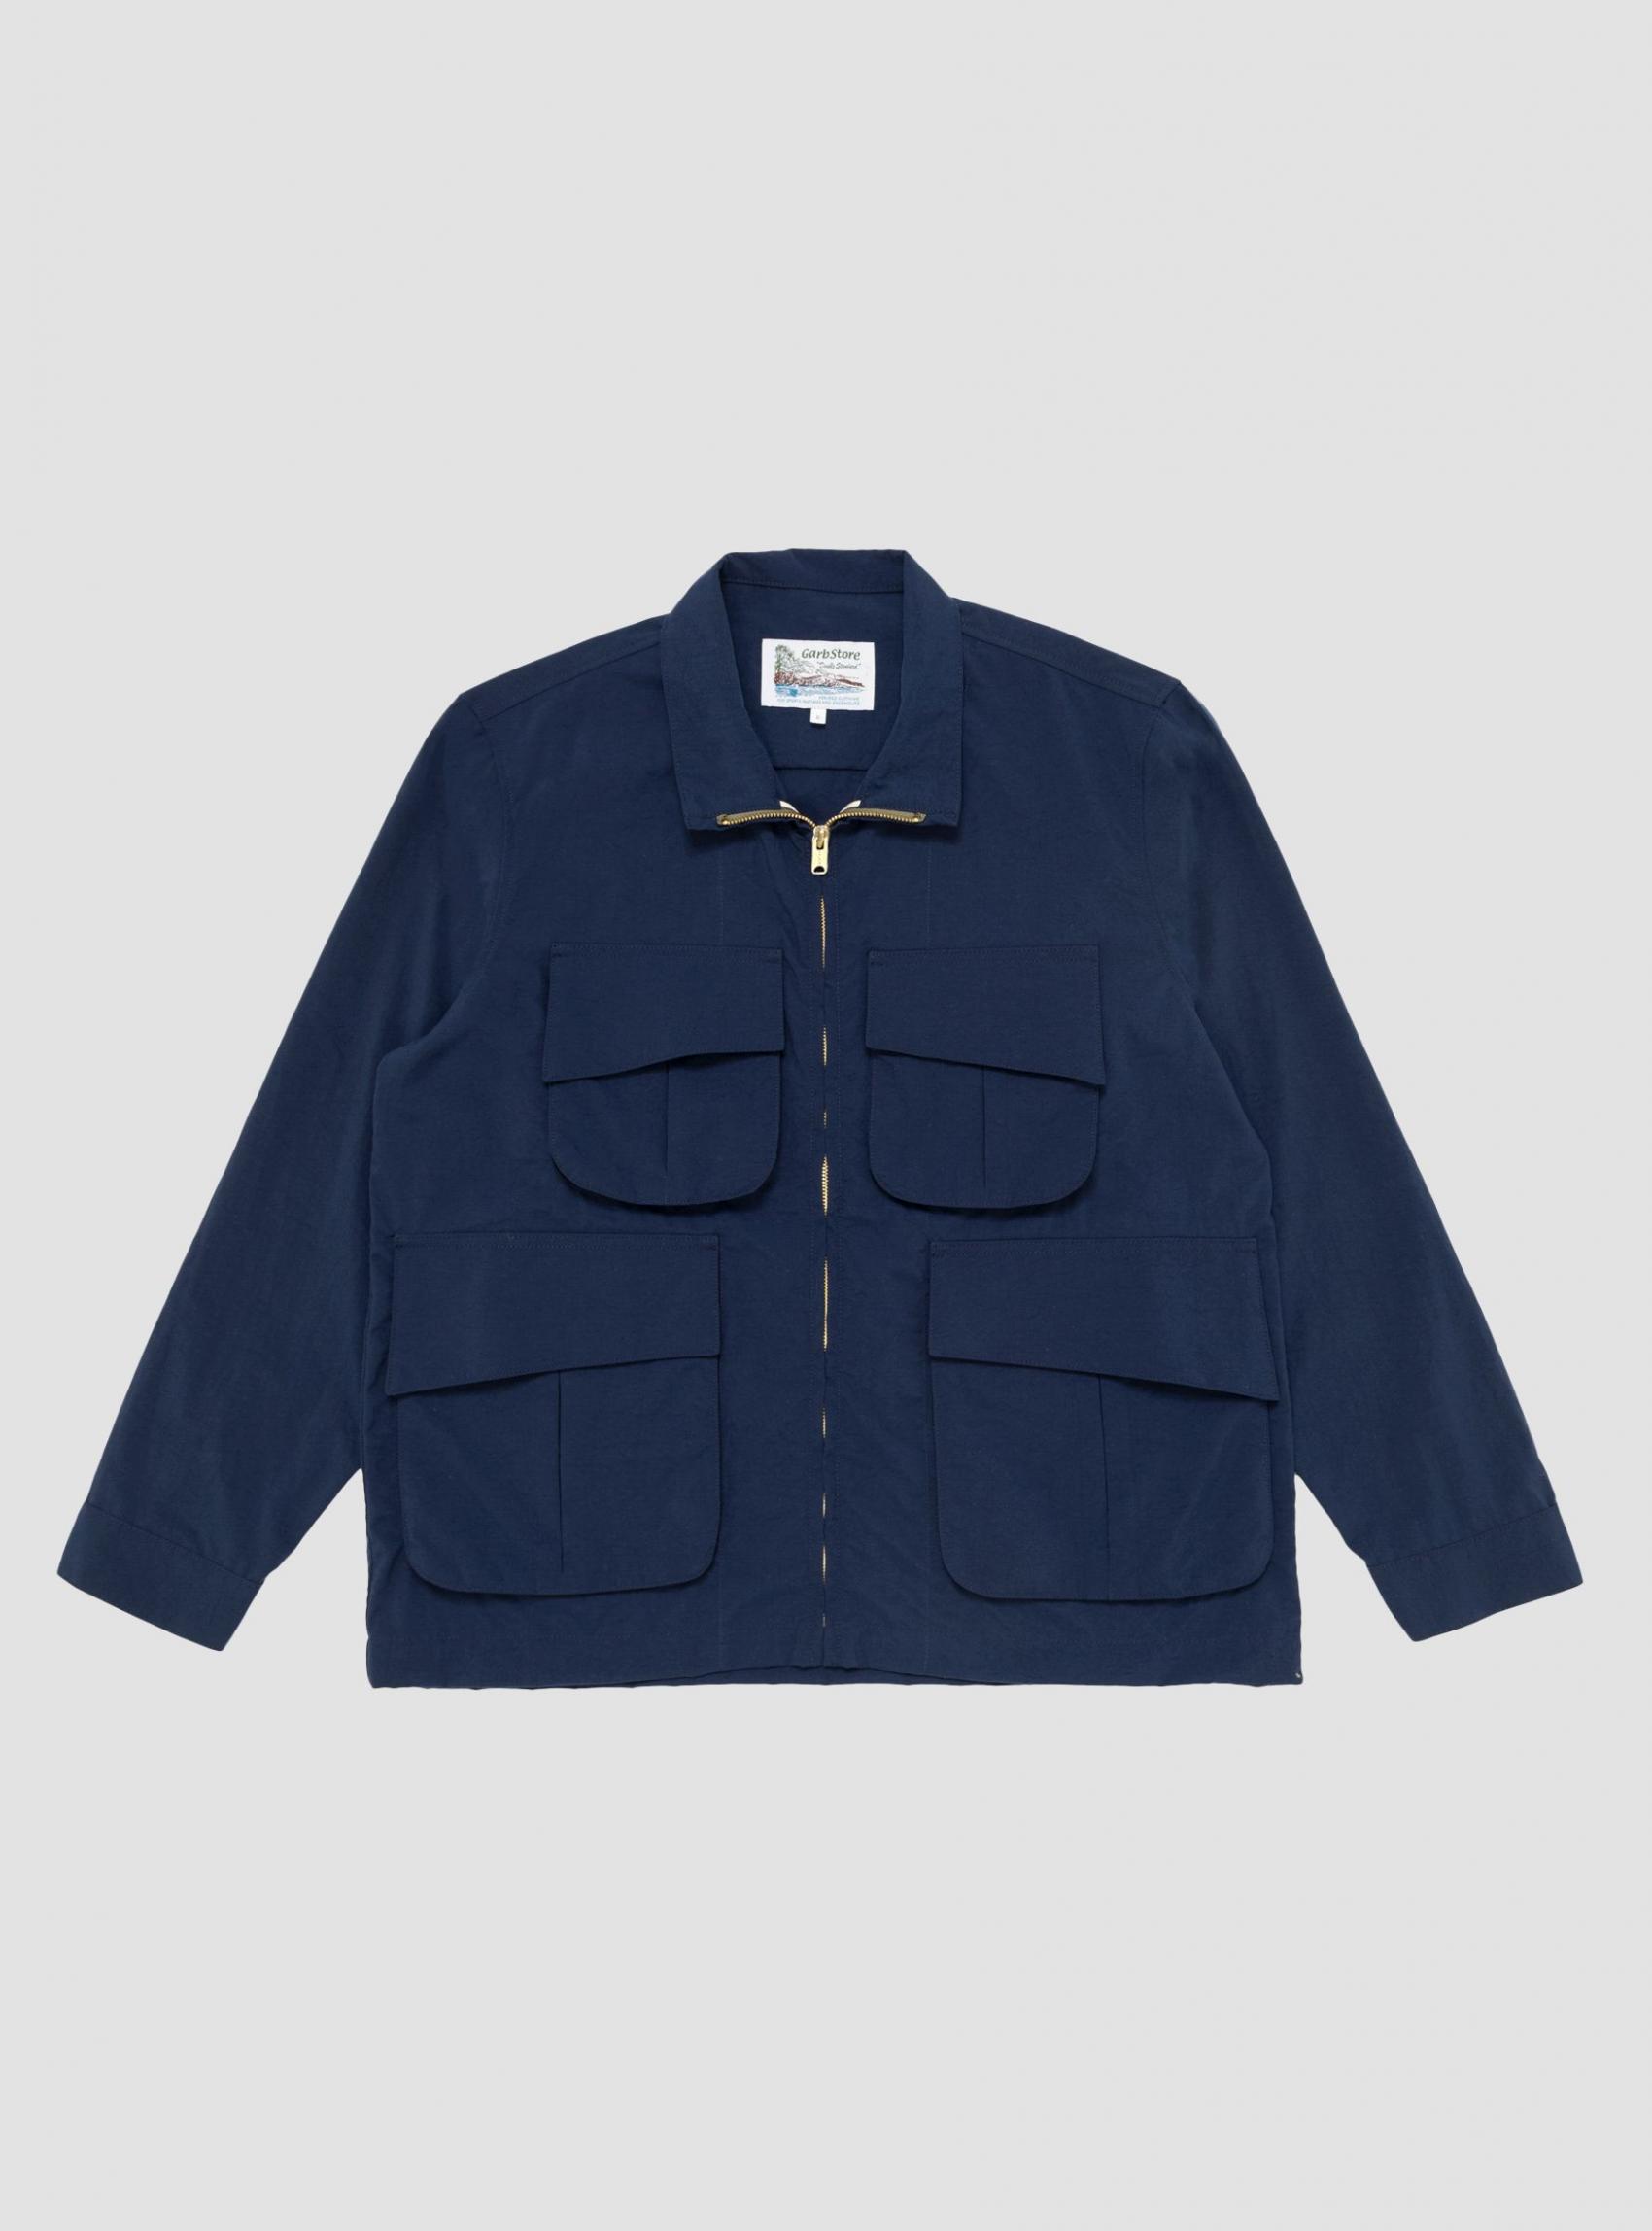 Jackets & Outerwear | Garbstore Mens Sangas Second Pattern Shirt Navy Navy